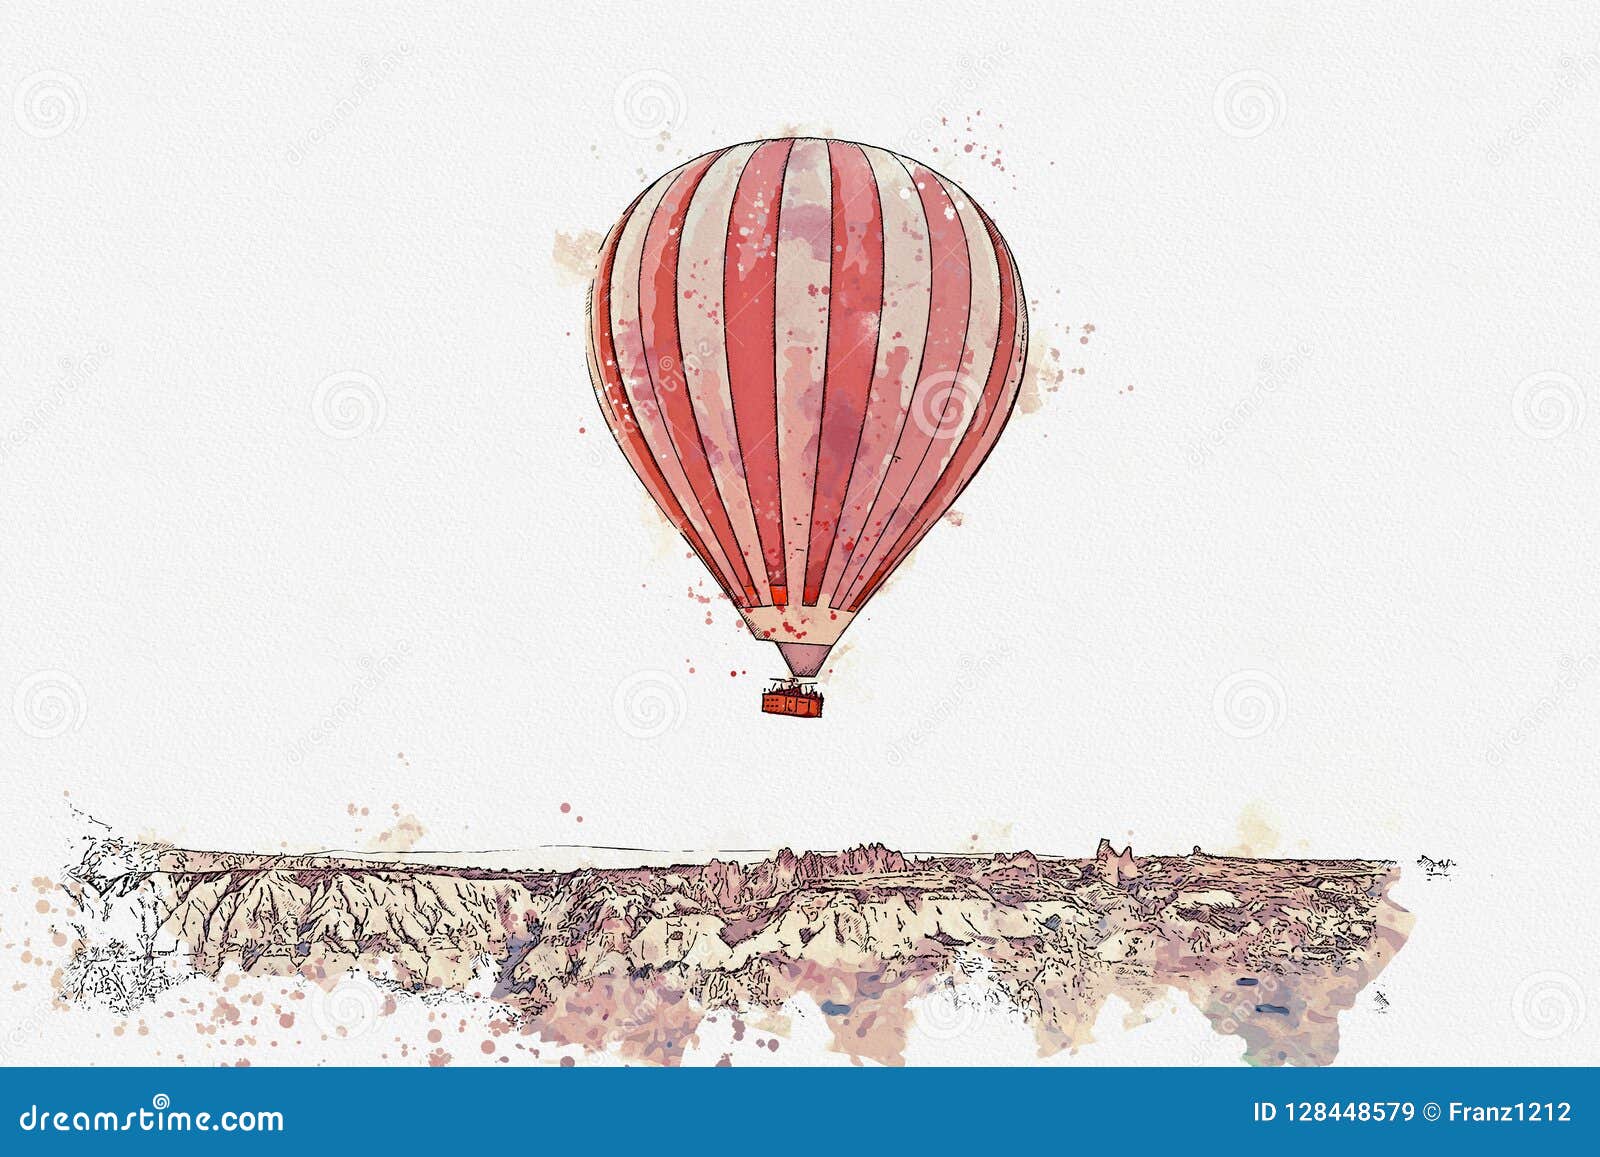 a watercolor sketch or . hot air balloon in the sky in kapadokia in turkey.